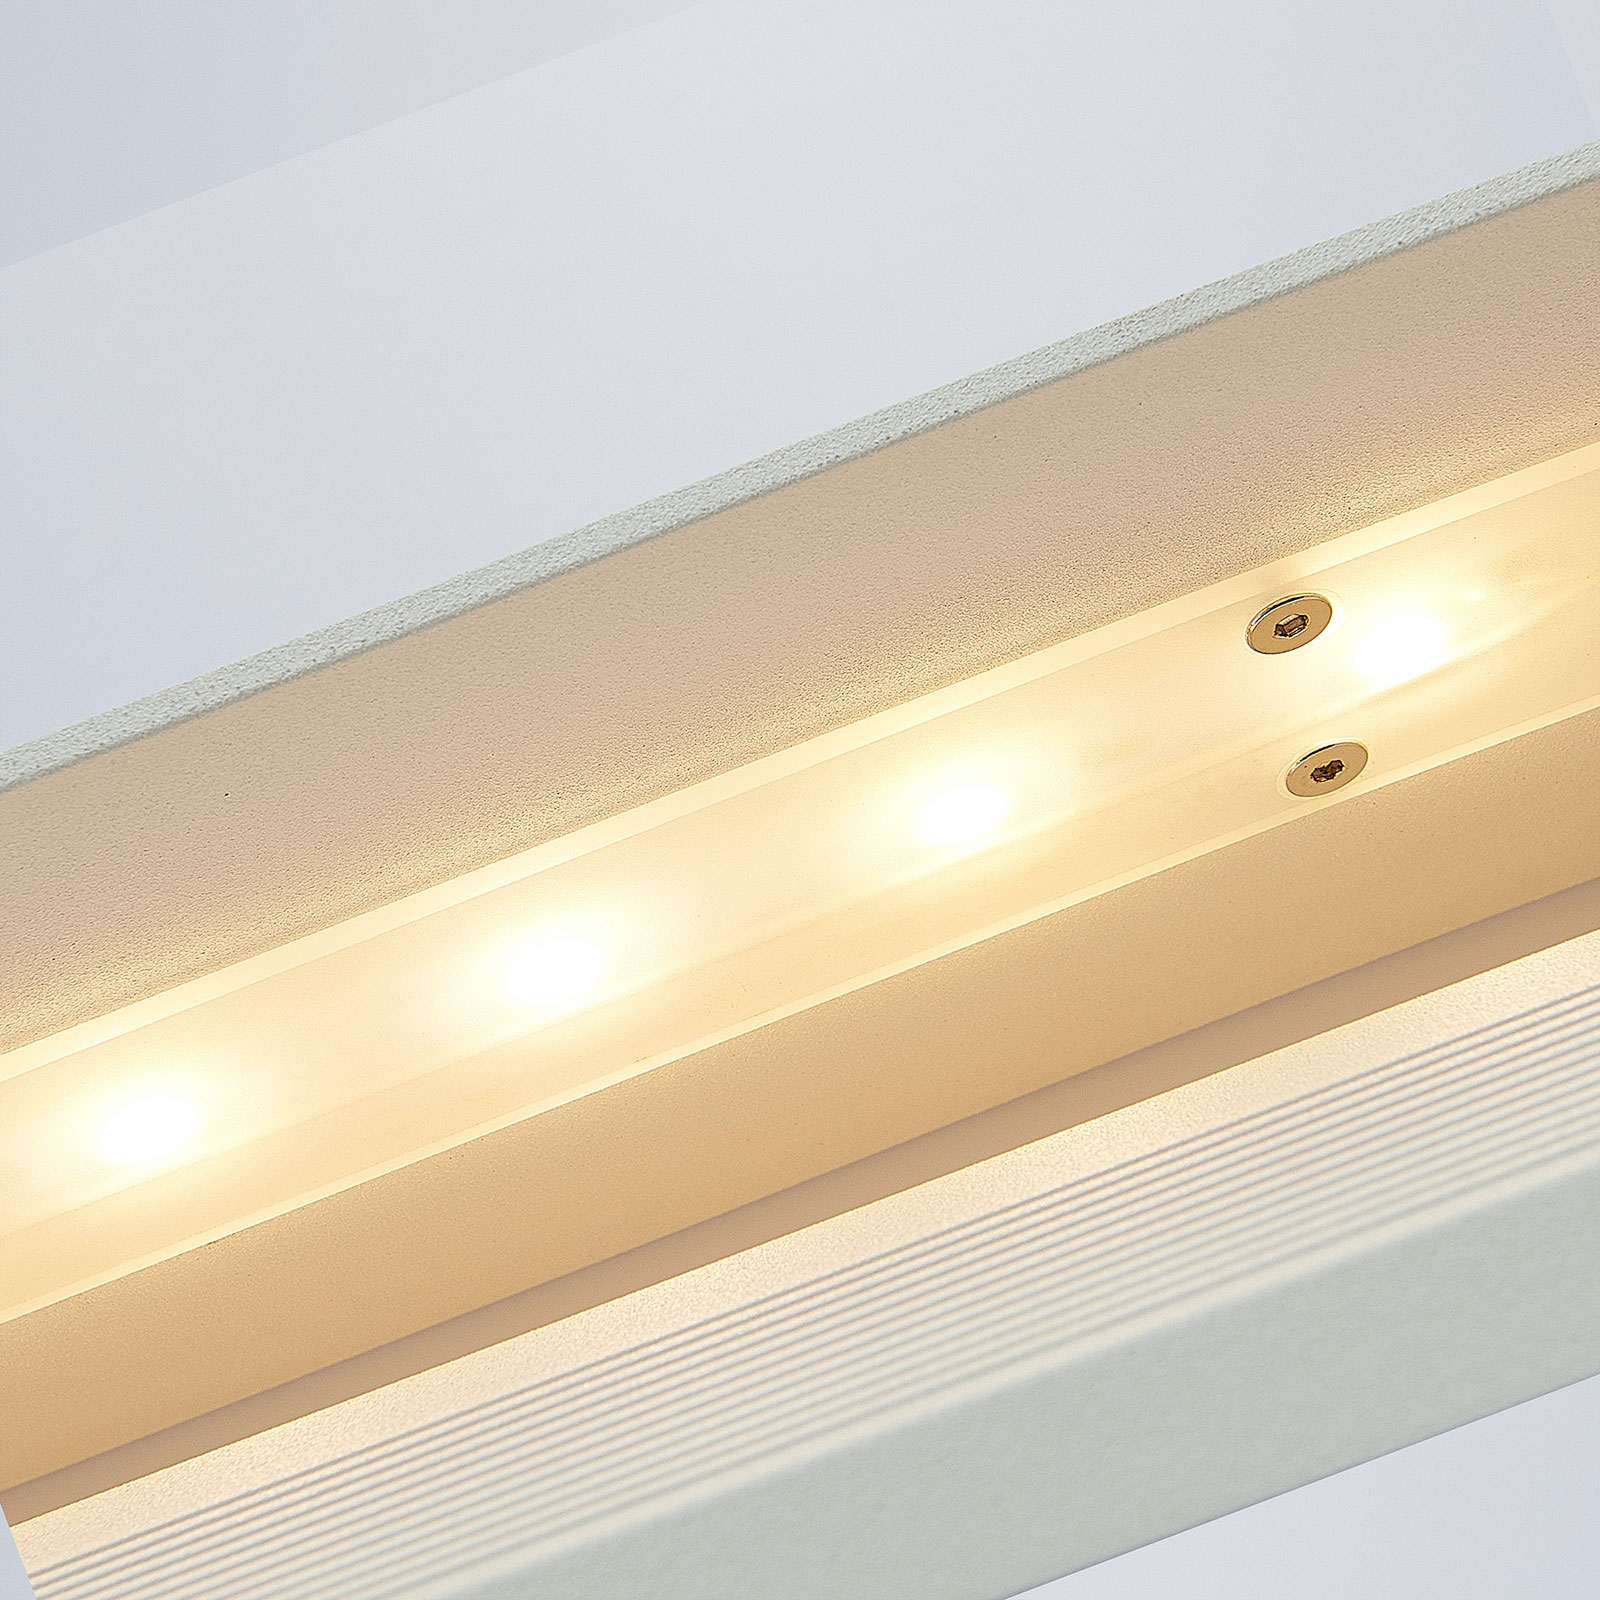 LED-Wandleuchte Lonisa, weiß, 53 cm